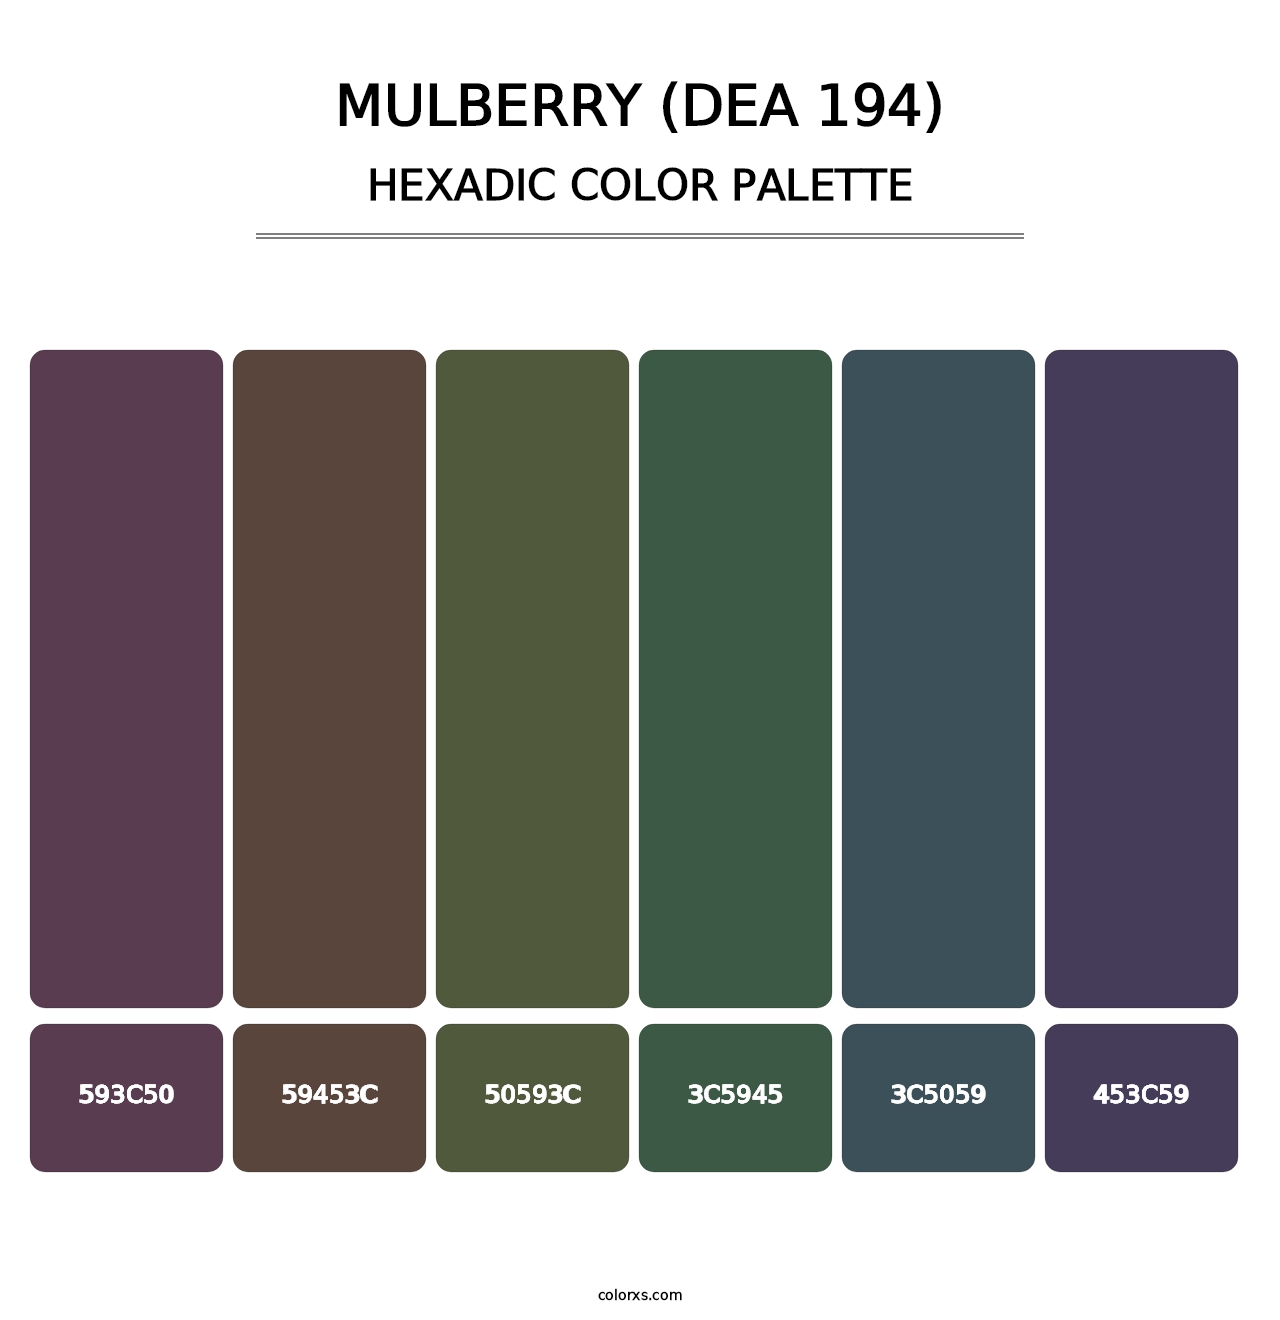 Mulberry (DEA 194) - Hexadic Color Palette